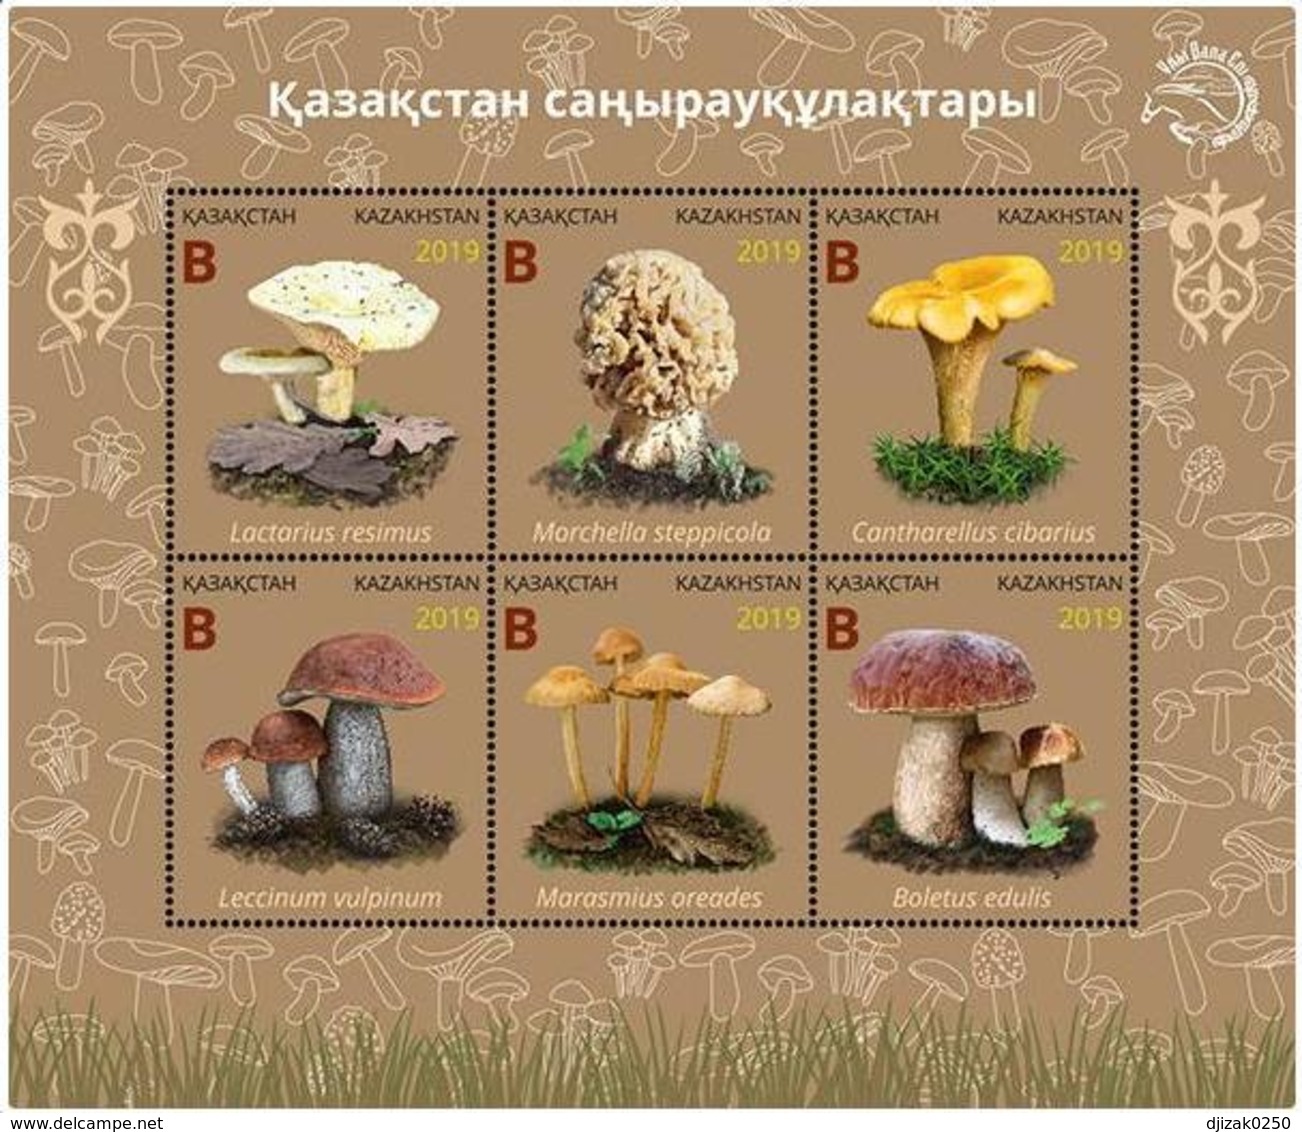 Kazakhstan 2019.Souvenir Sheet. Mushrooms Of Kazakhstan. NEW!!! - Hongos